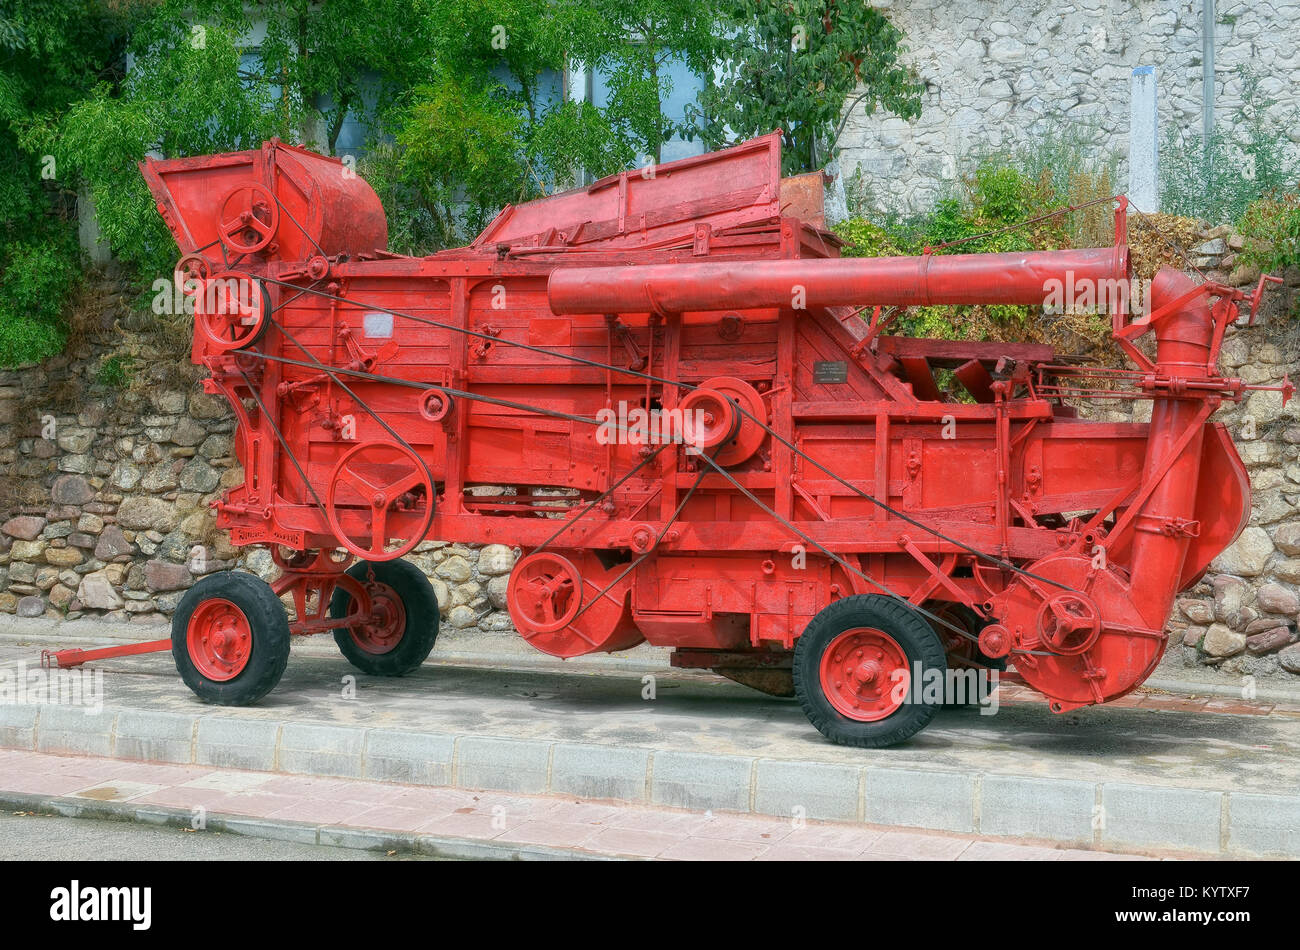 Ajuria Vitoria. Old threshing machine, donated by the family Montolio - Villanueva, in 2008 to Montan town (Castellon - Spain) Stock Photo